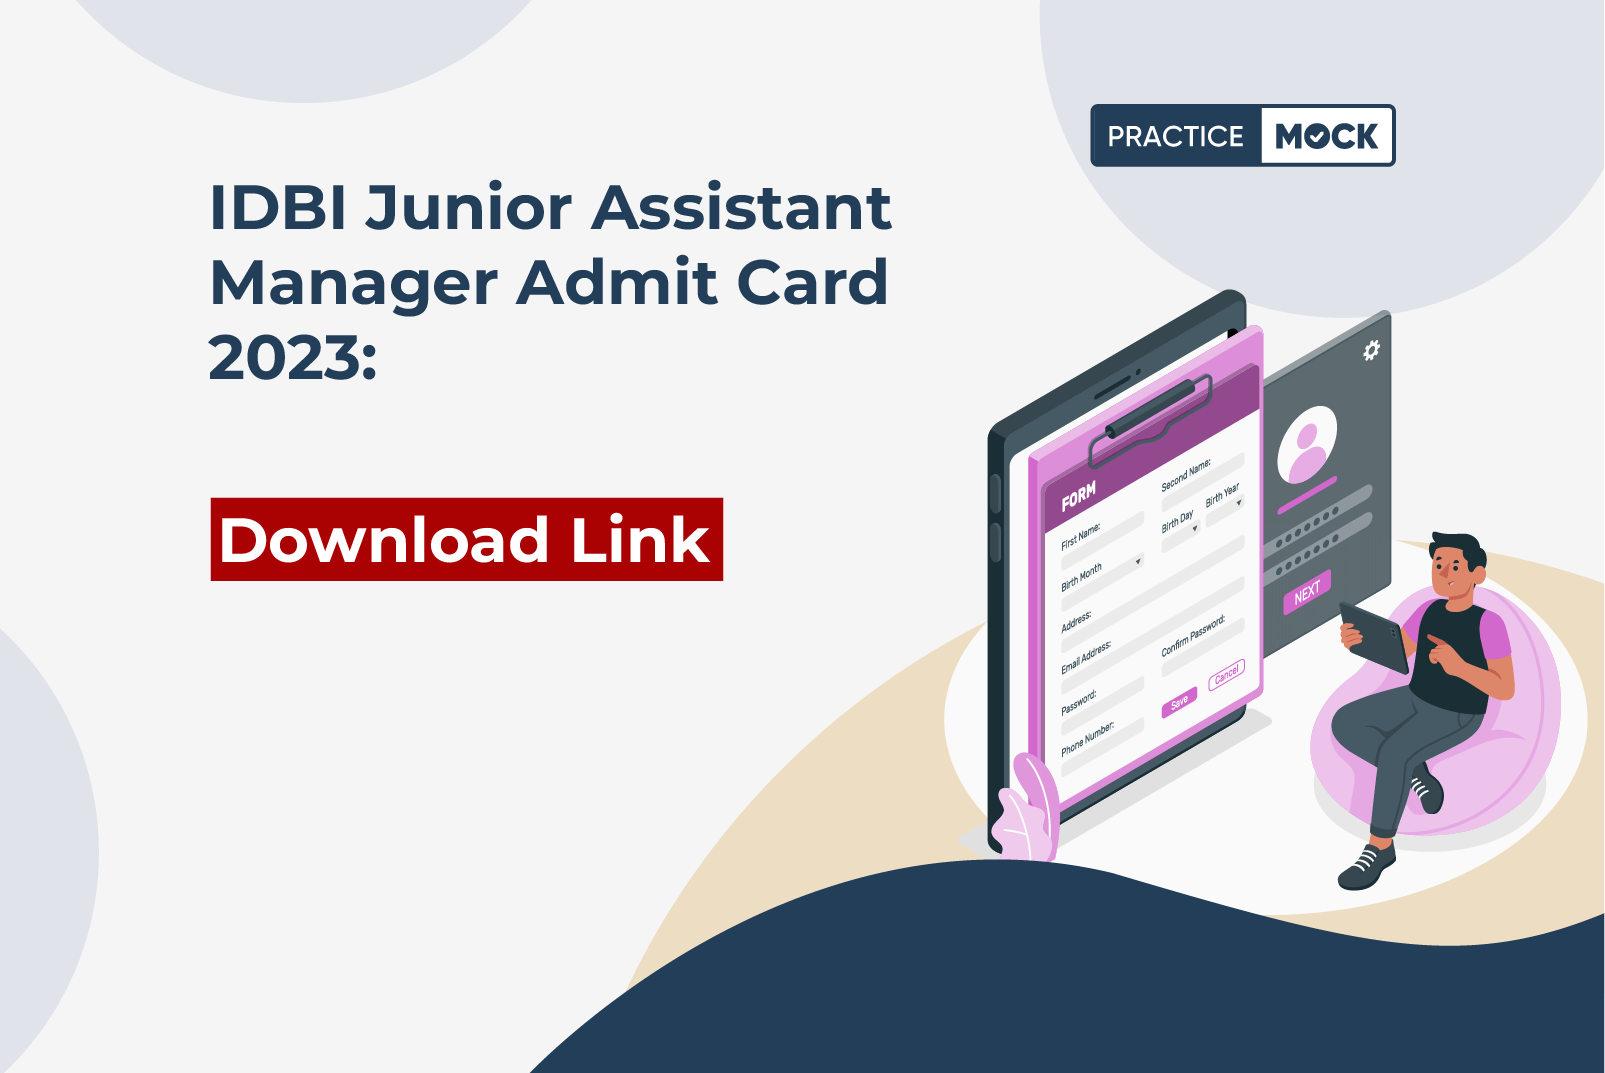 IDBI Junior Assistant Manager Admit Card 2023 Download Link